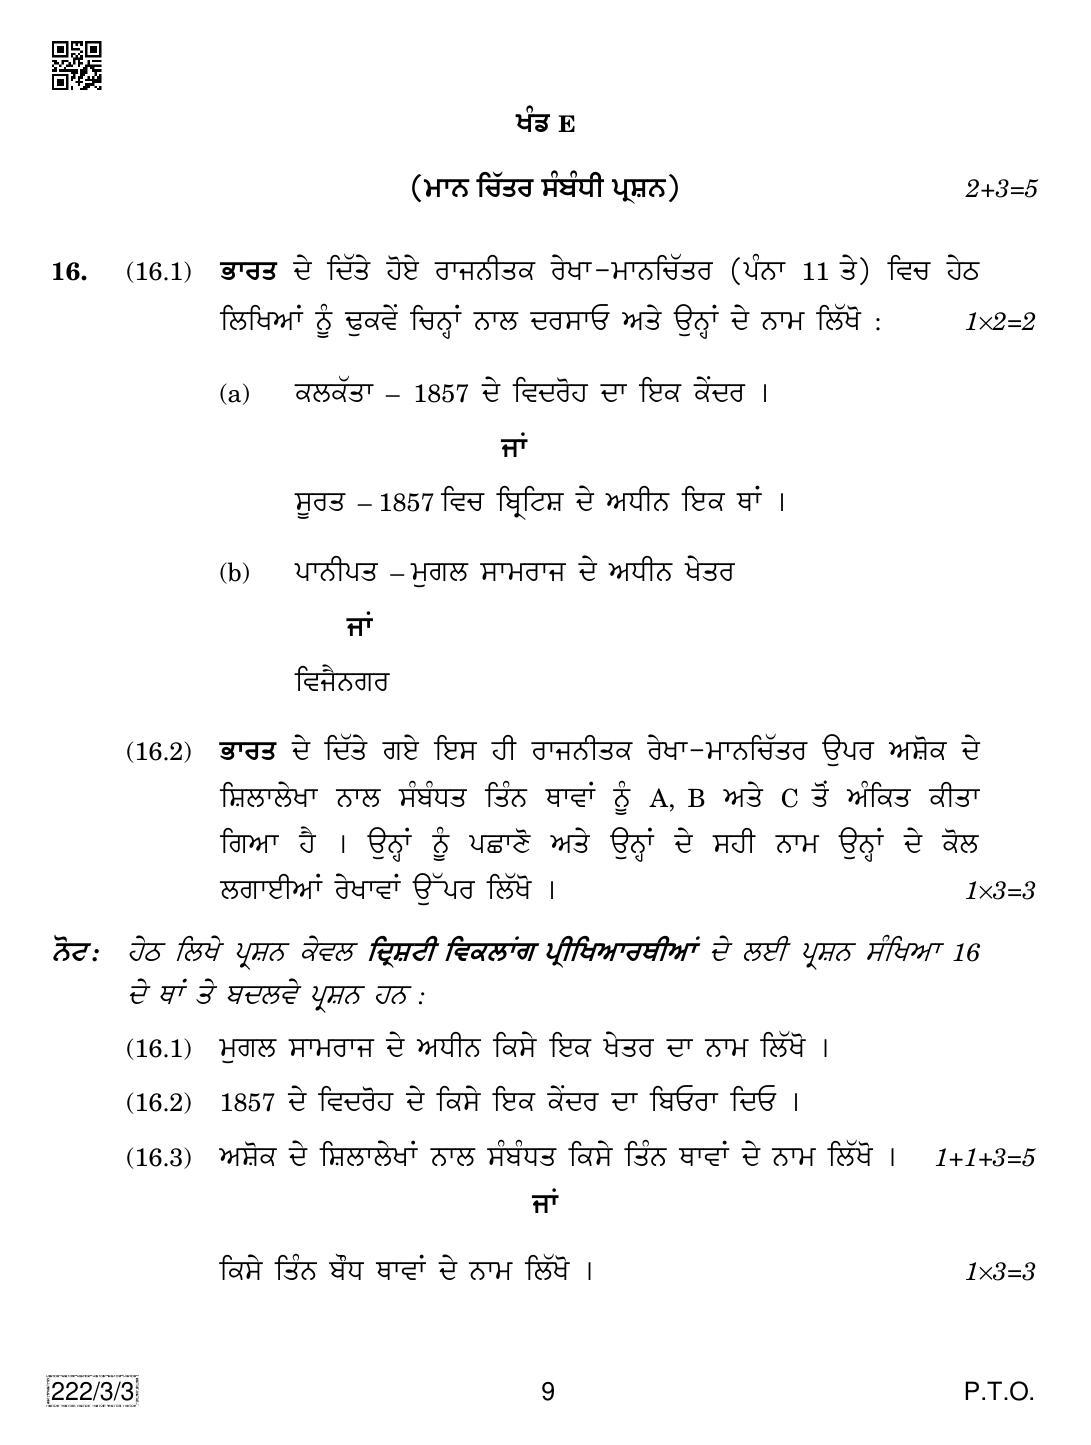 CBSE Class 12 222-3-3 Hiastory (Punjabi) 2019 Question Paper - Page 9